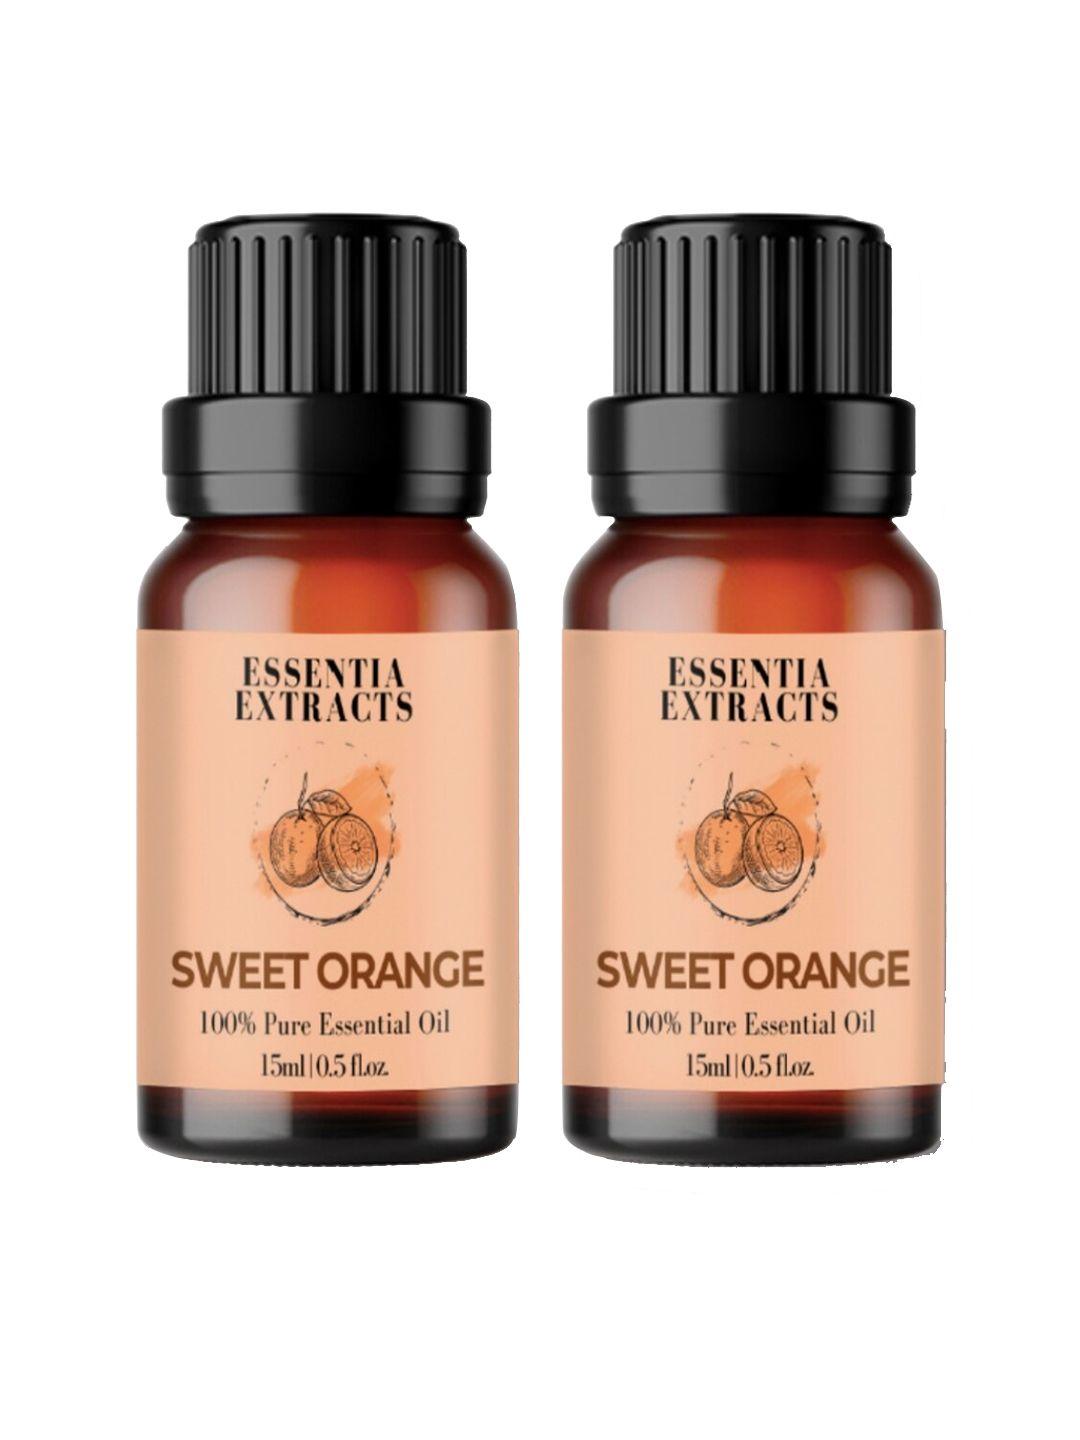 essentia extracts set of 2 sweet orange essential oils - 15 ml each